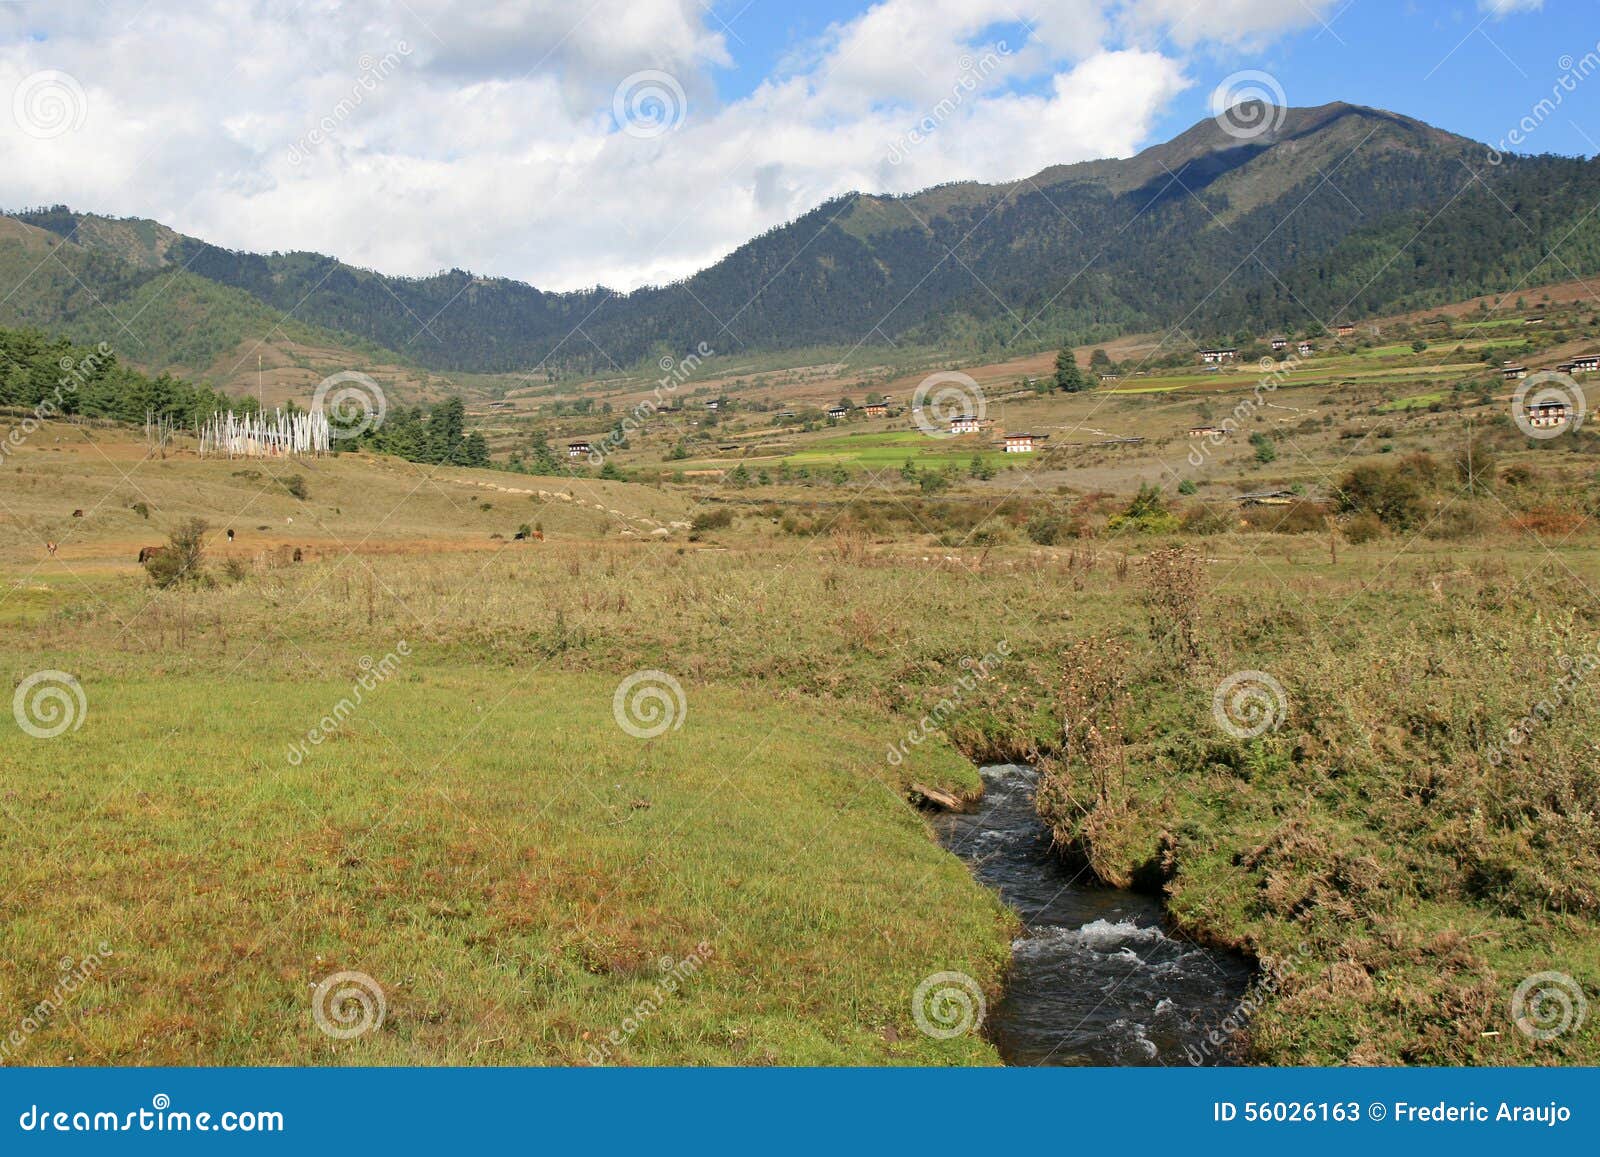 phojika valley - bhutan